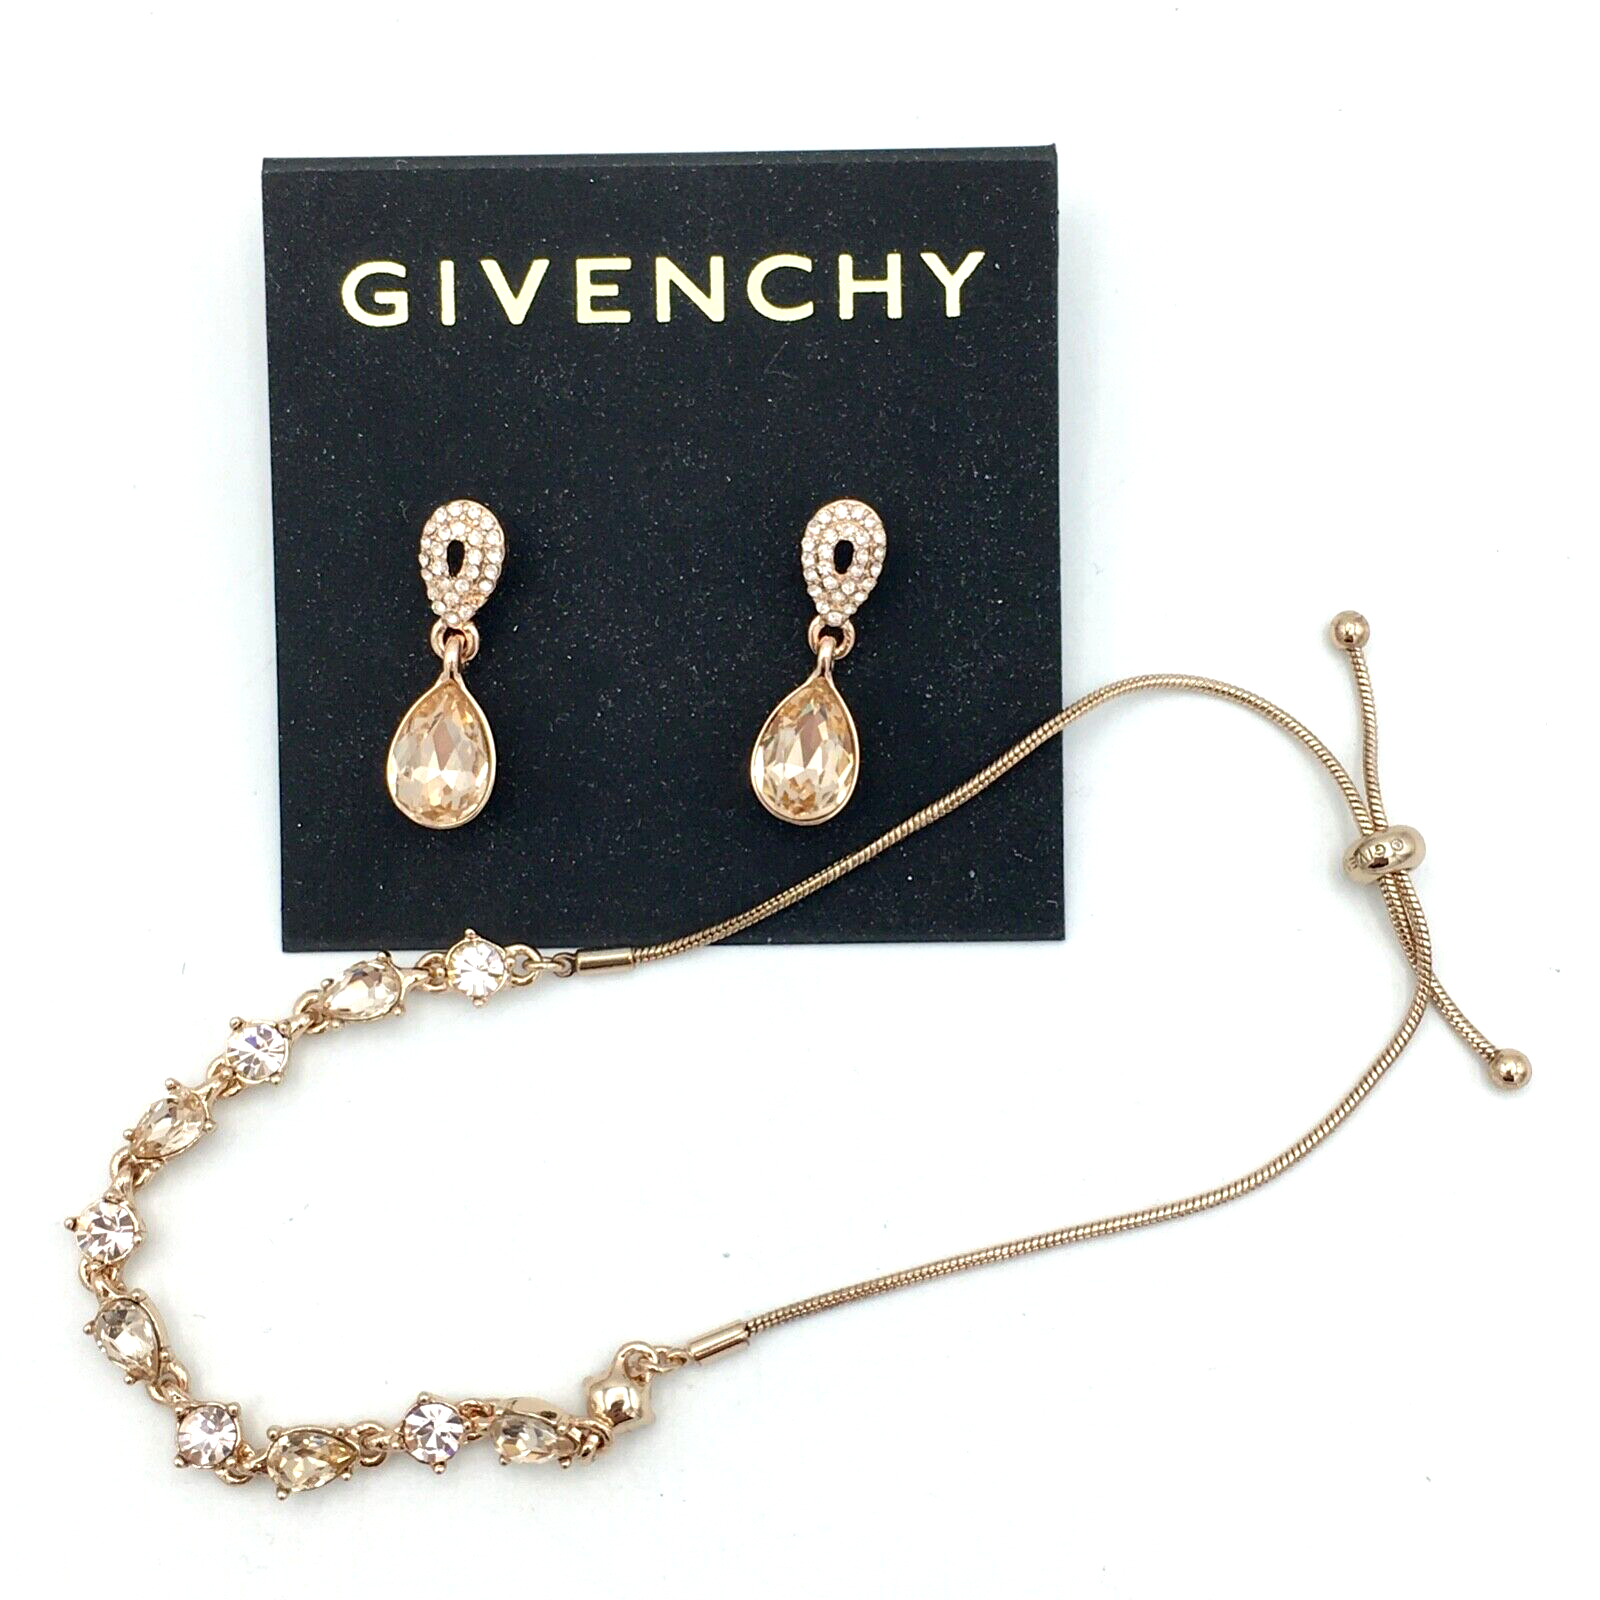 GIVENCHY rose gold tone peachy pink crystal drop earrings & slide bracelet set - $40.00